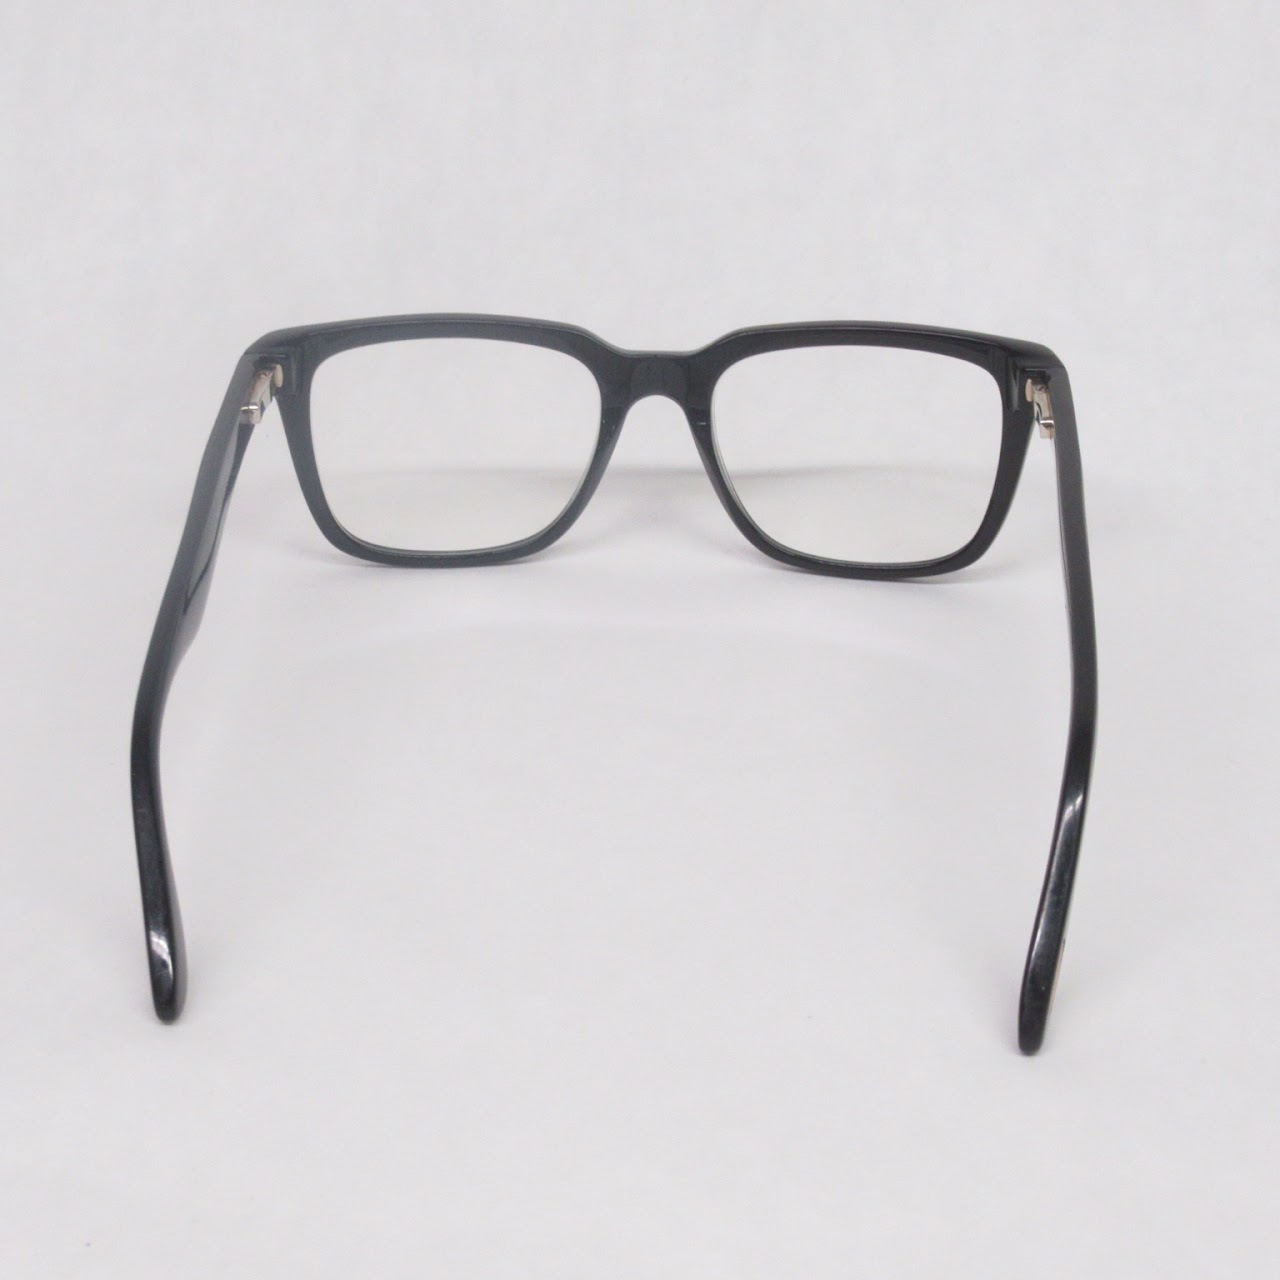 Tom Ford Rx Glasses